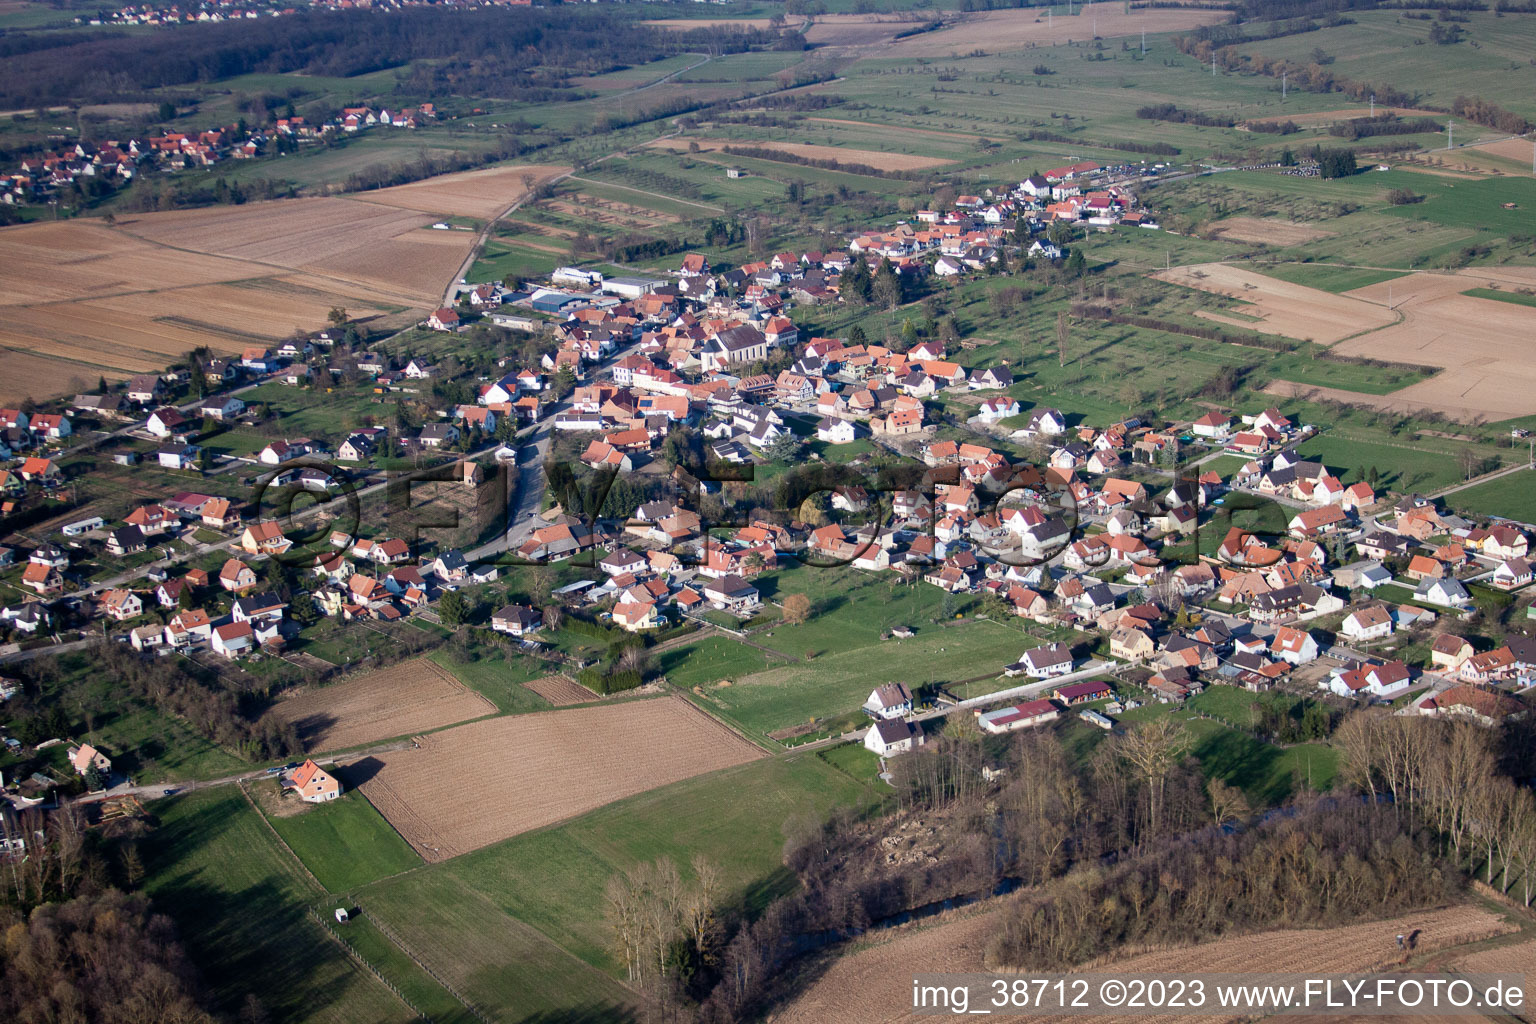 Luftbild von Morsbronn-les-Bains im Bundesland Bas-Rhin, Frankreich